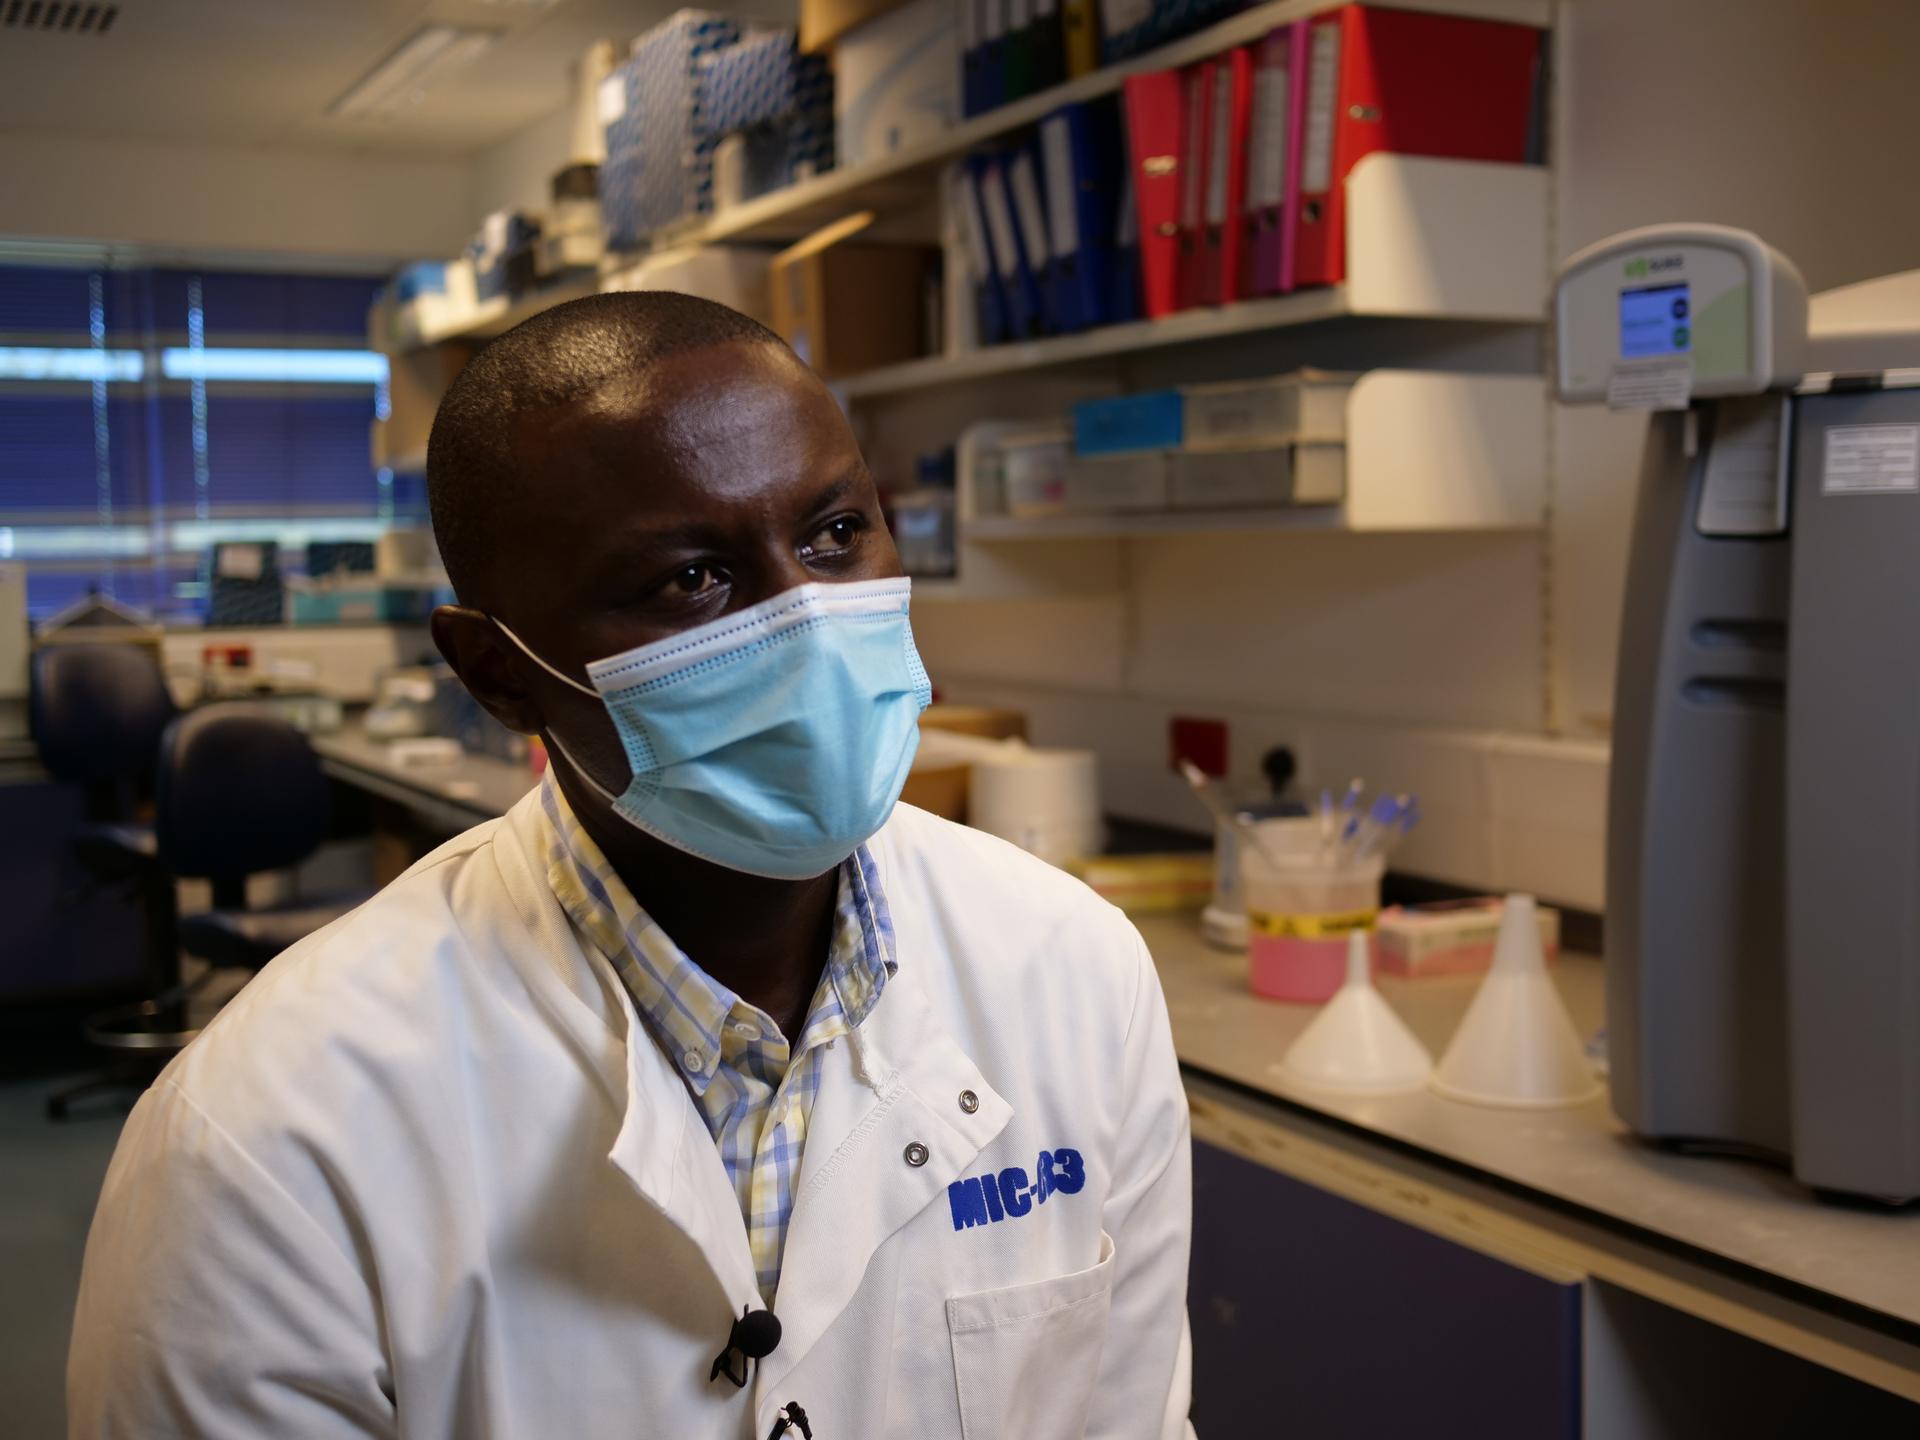 KEMRI’s principal investigator, George Warimwe, for the Oxford AstraZeneca COVID-19 vaccine trial is shown at the KEMRI Wellcome Trust lab in Kilifi, Kenya, on Nov. 13, 2020.